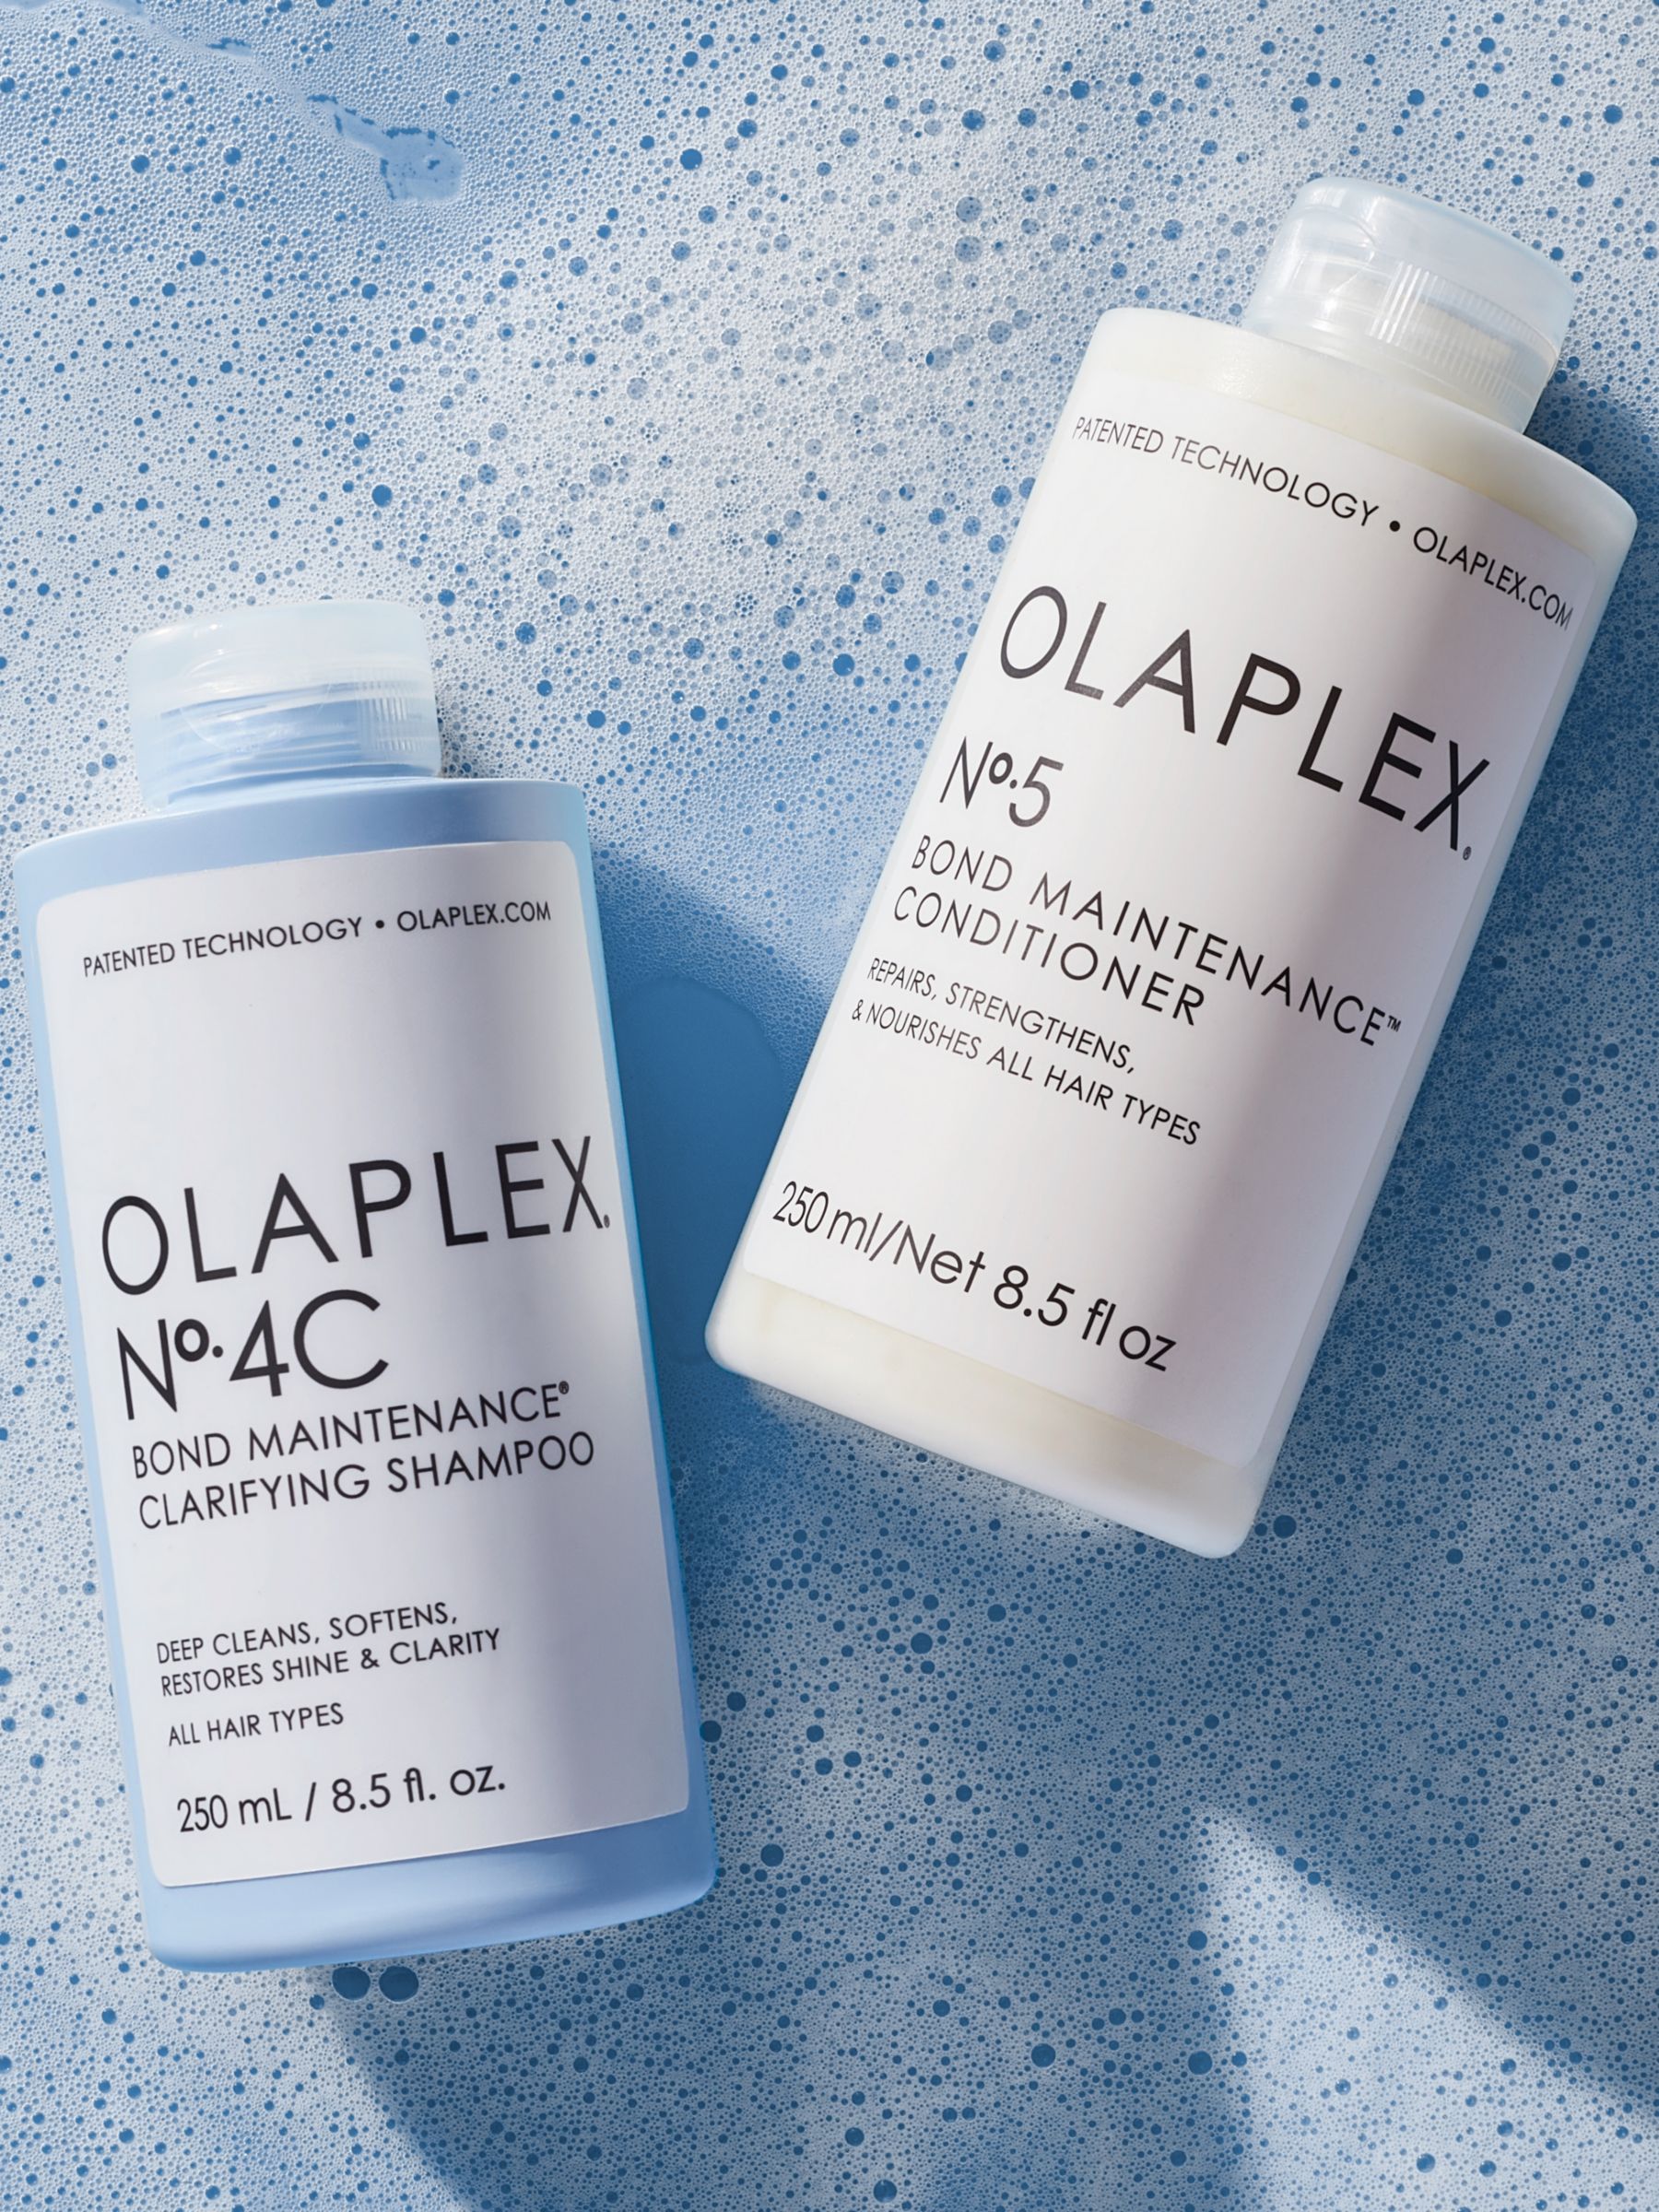 Olaplex No.4C Bond Maintenance Clarifying Shampoo, 250ml 5